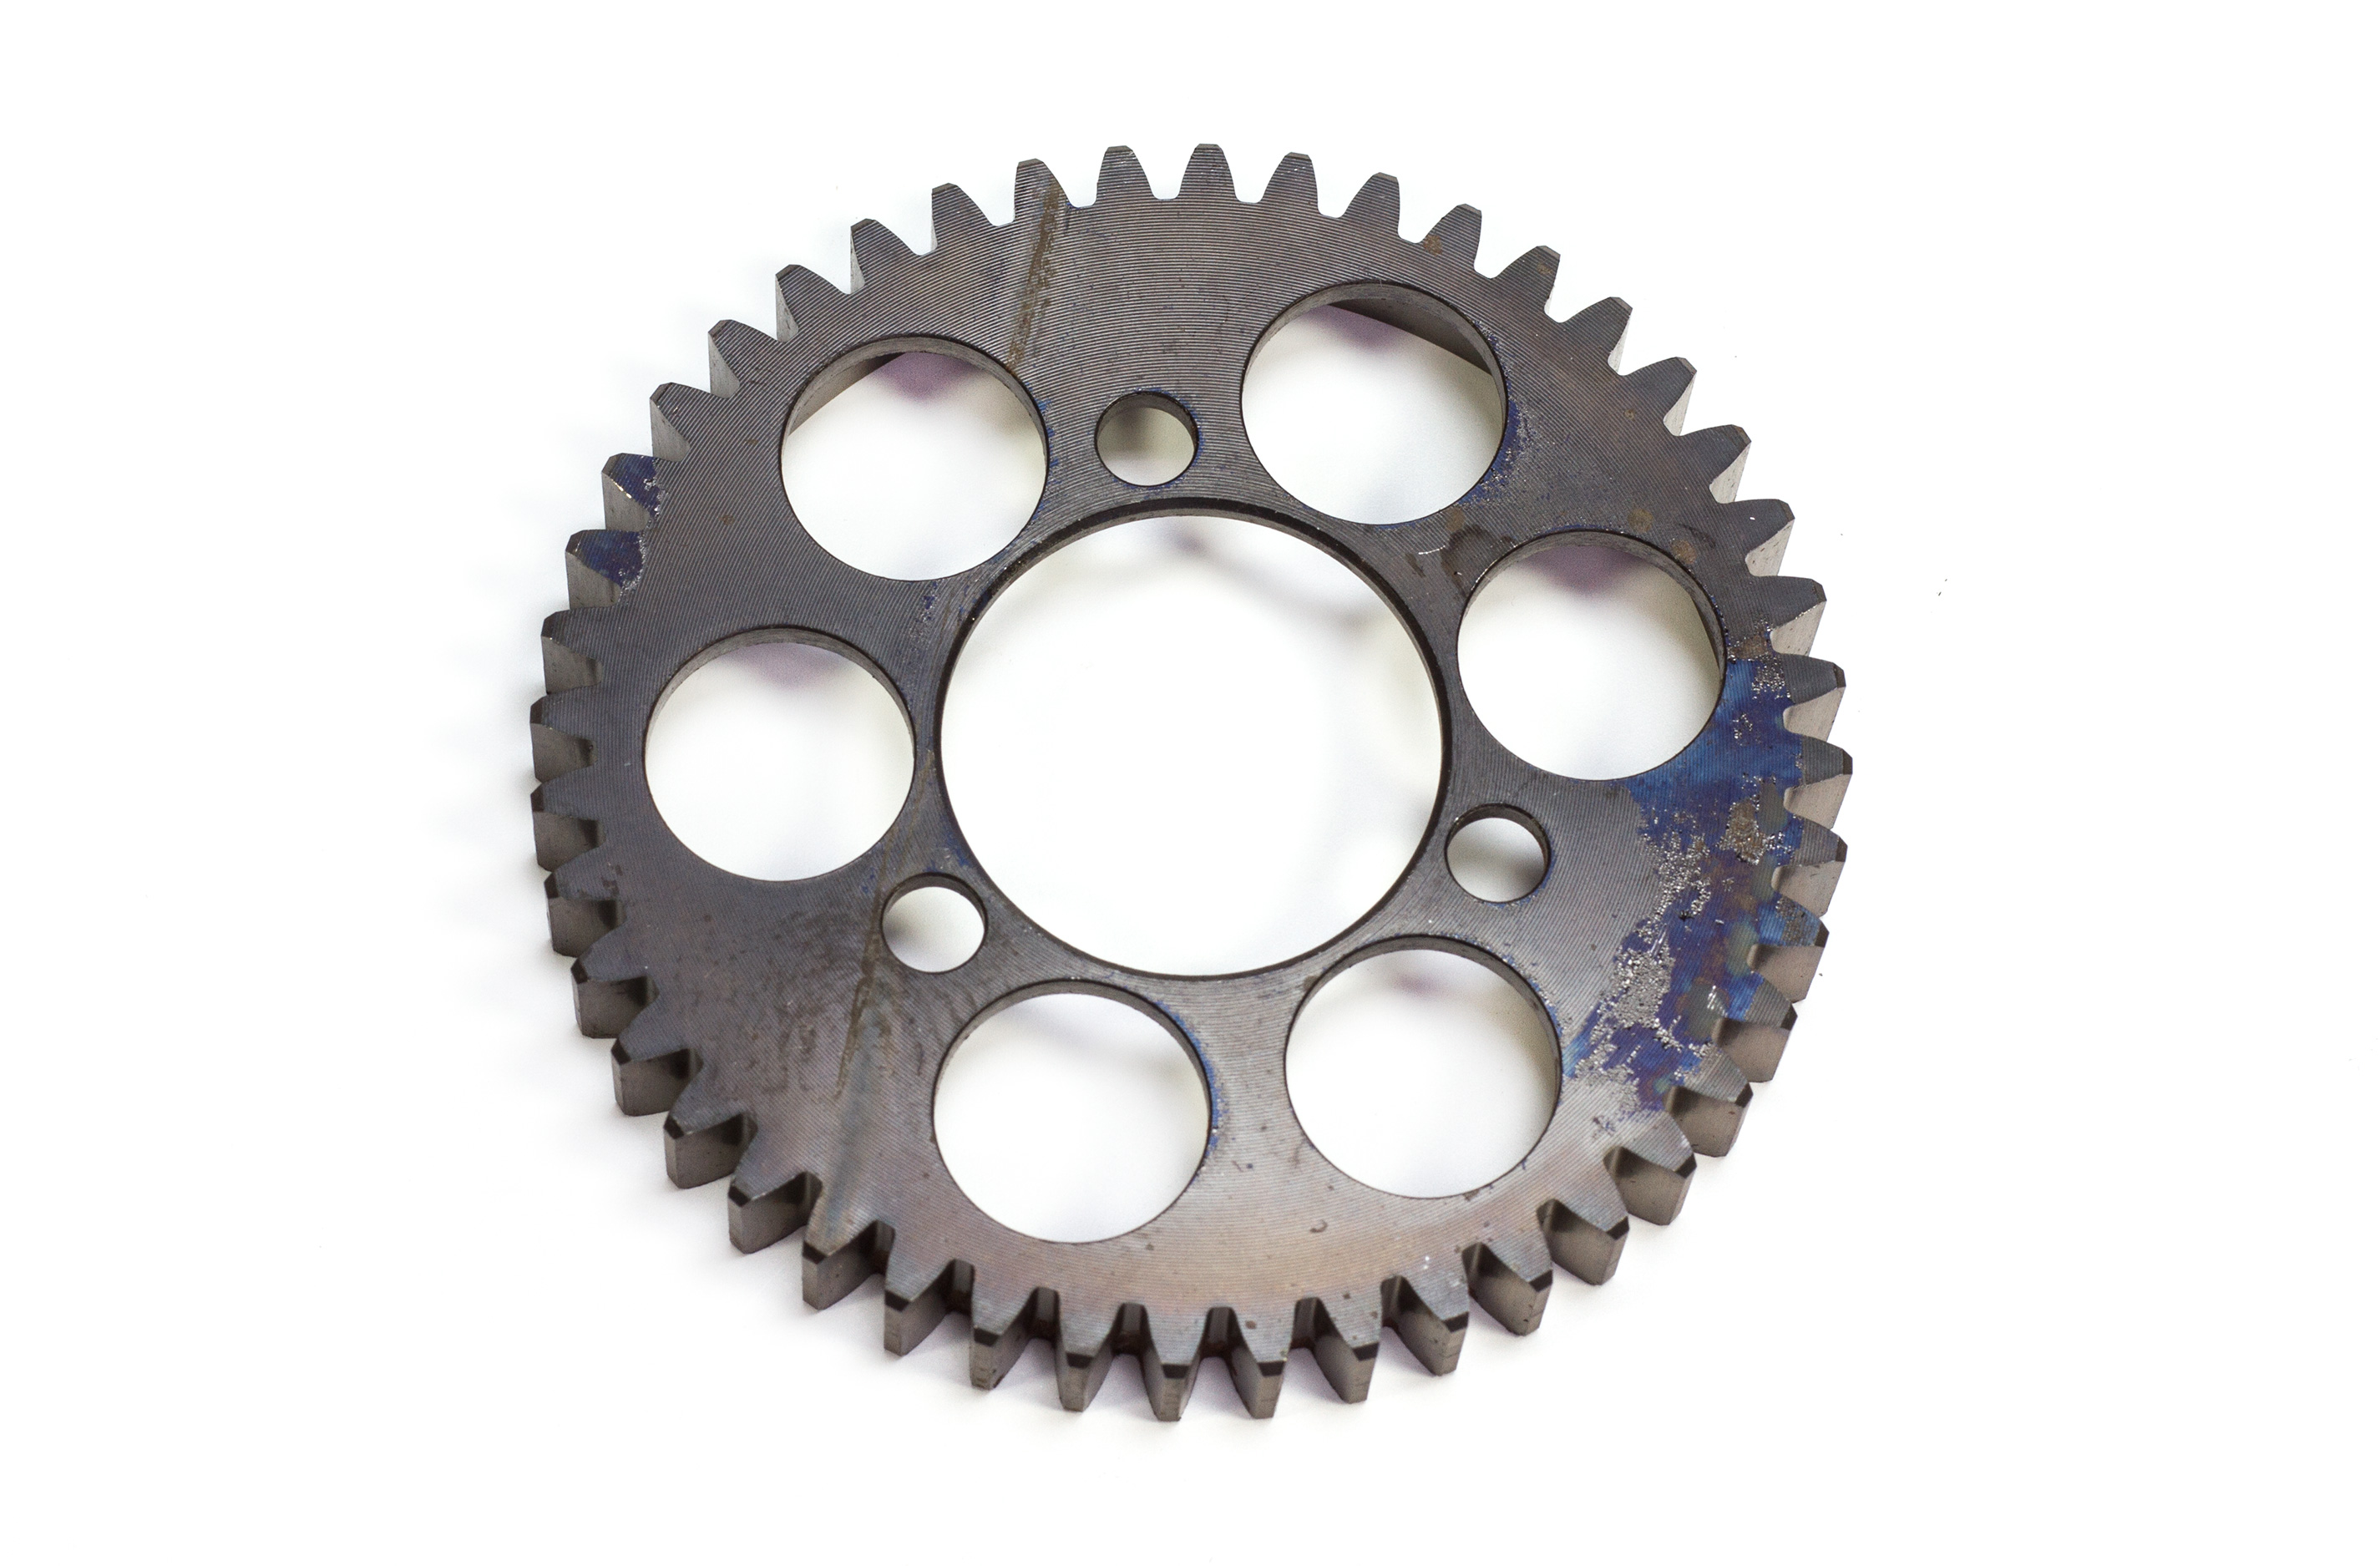 6491/01 FG Steel spur gear 44T - 1 pcs